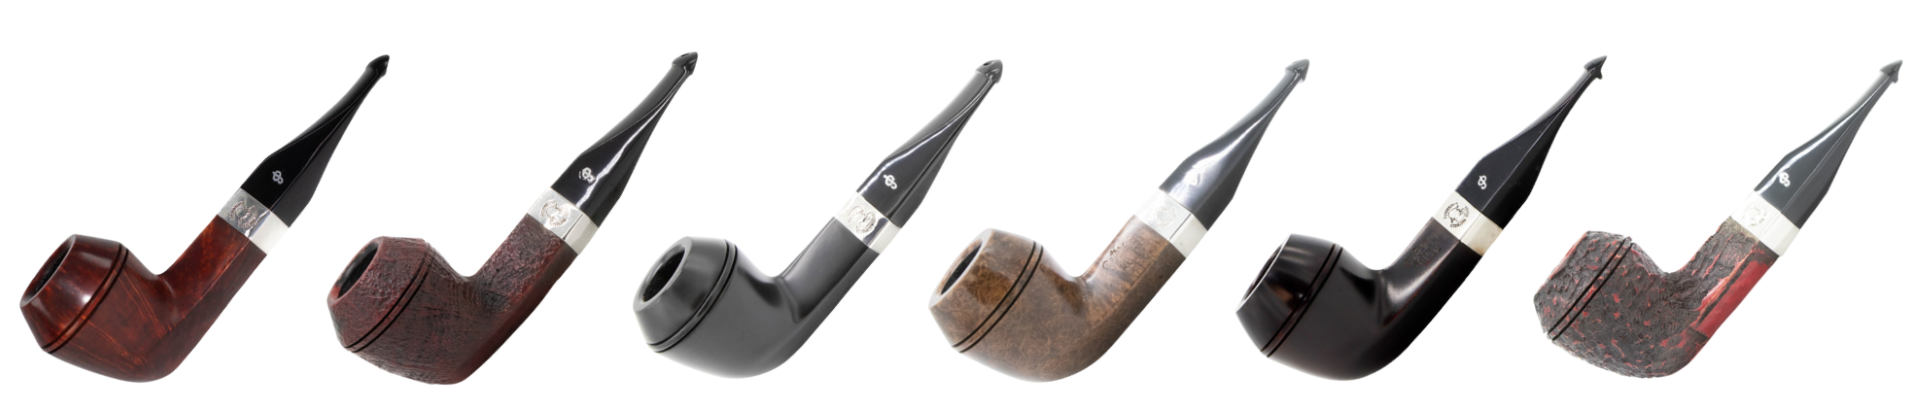 Peterson Sherlock Holmes Baker Street Tobacco Pipe 